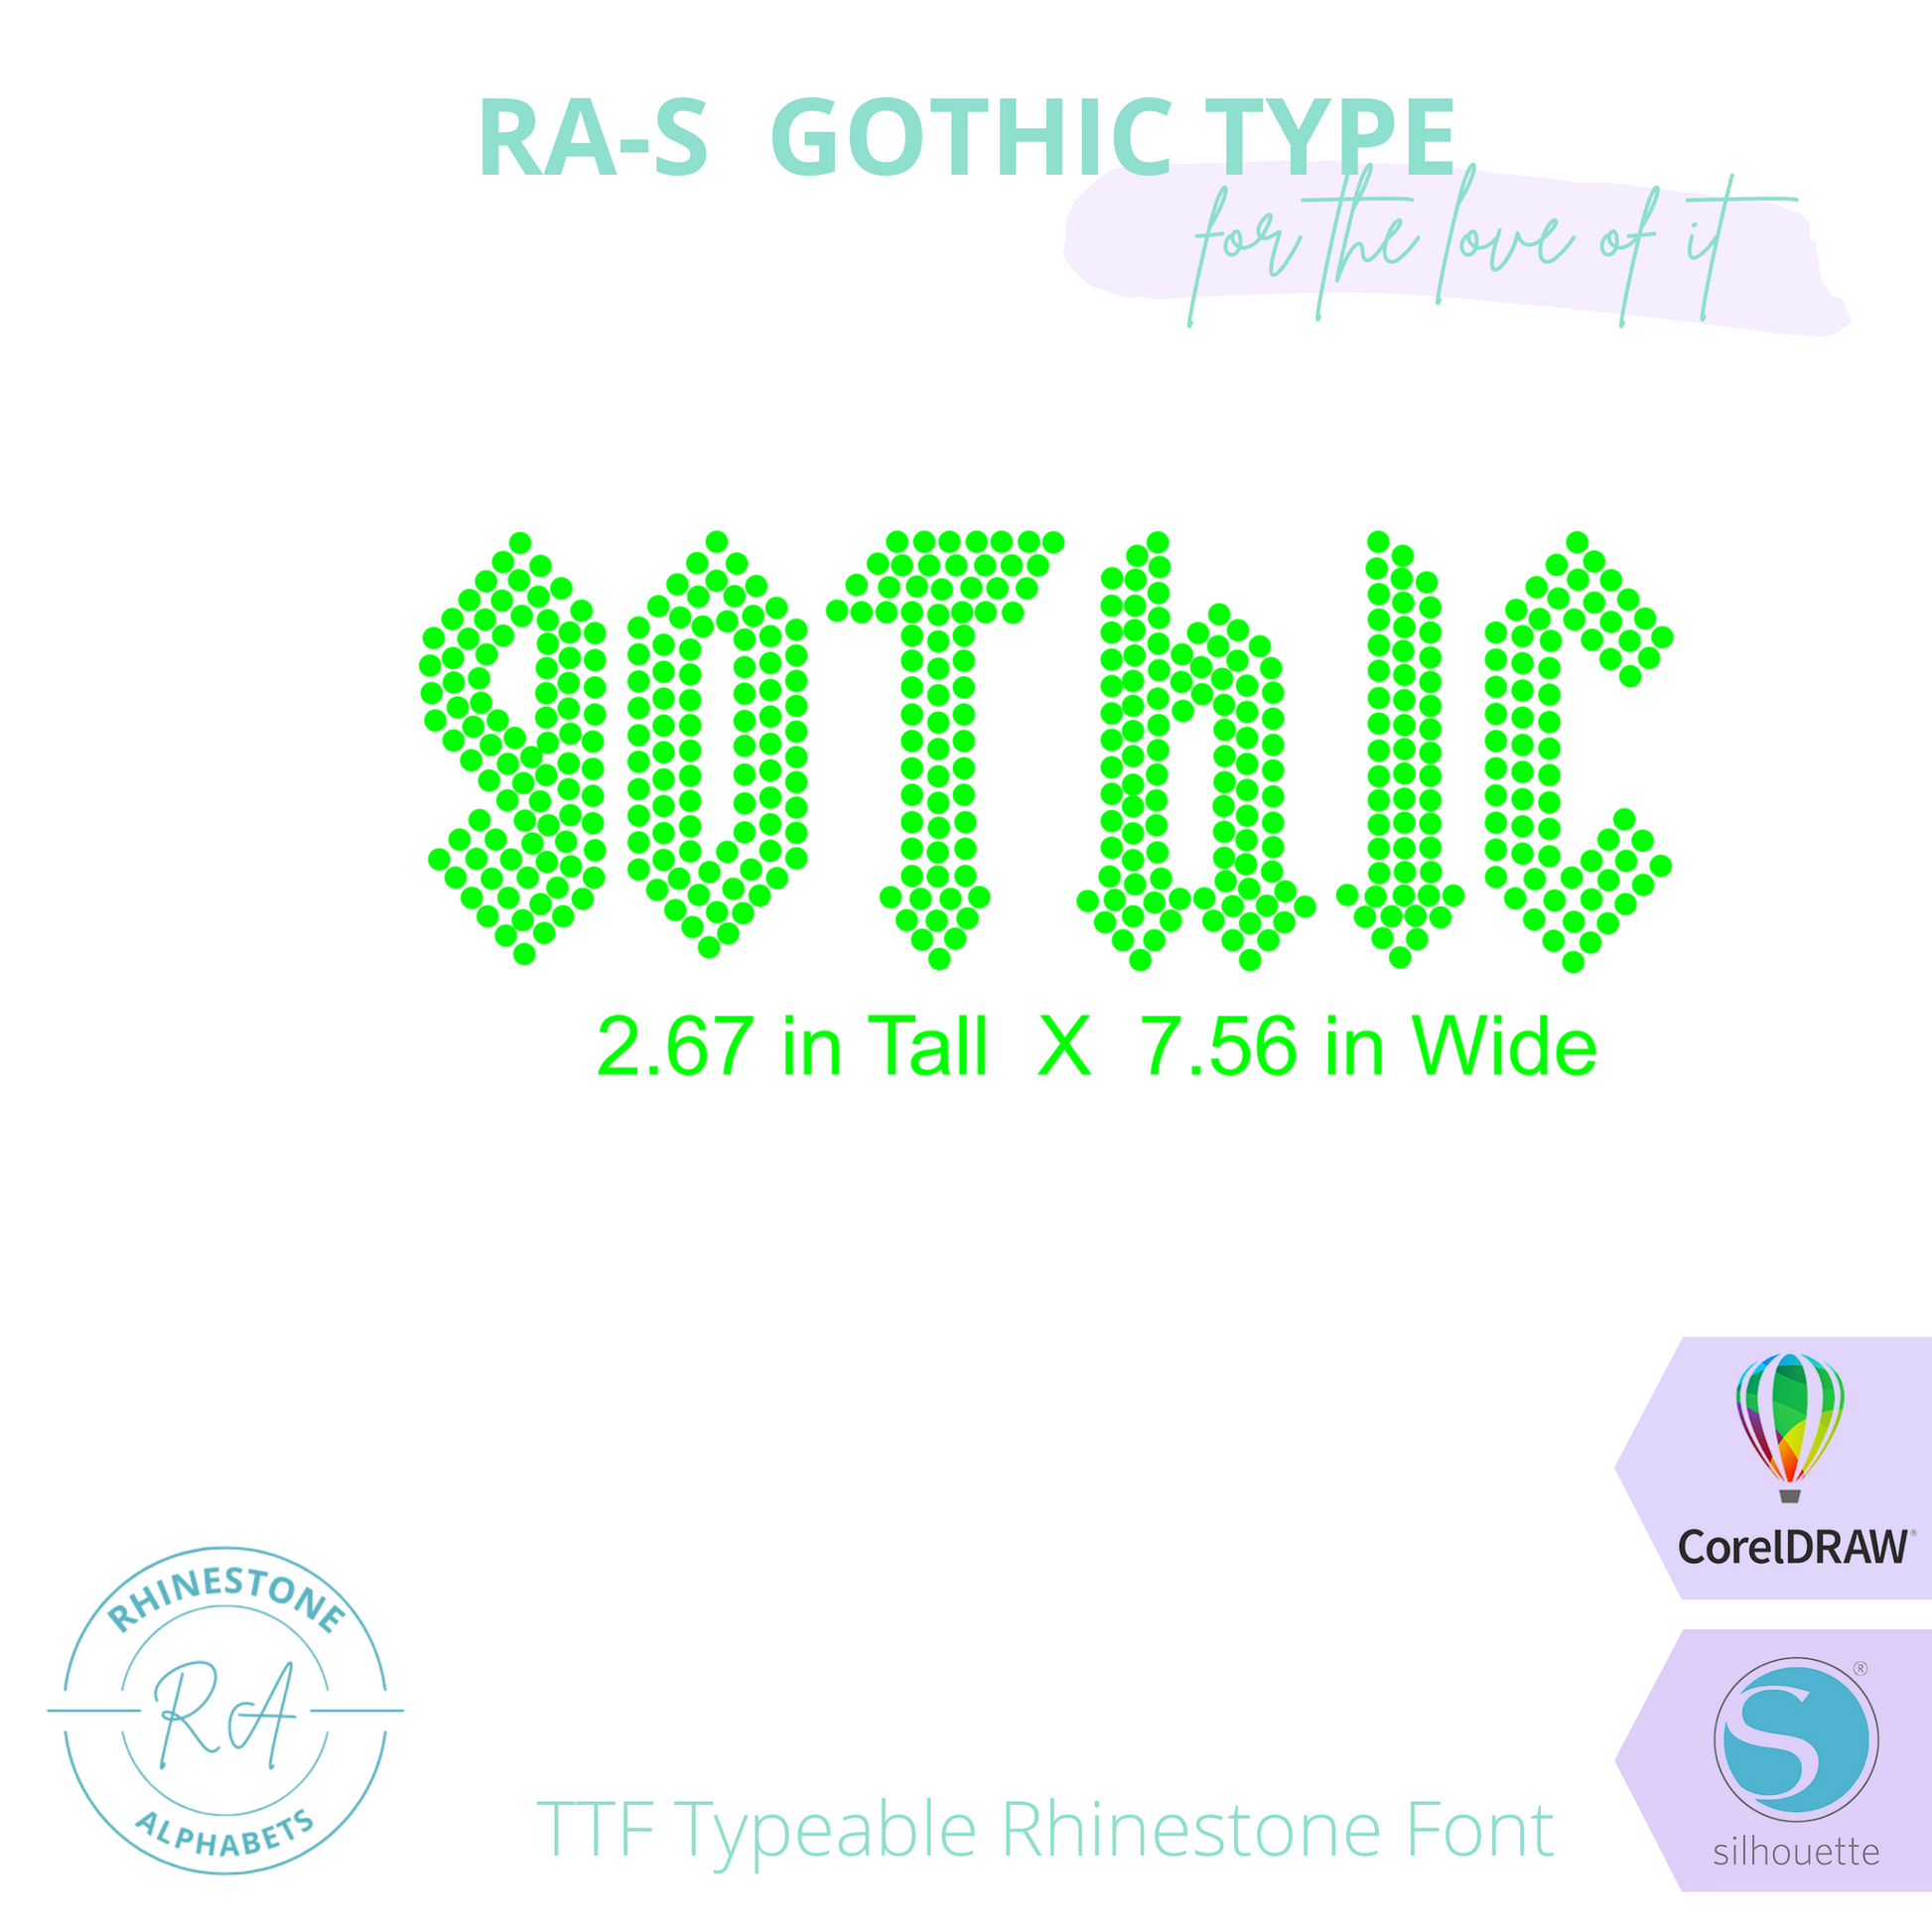 RA-S Gothic Type - RhinestoneAlphabets